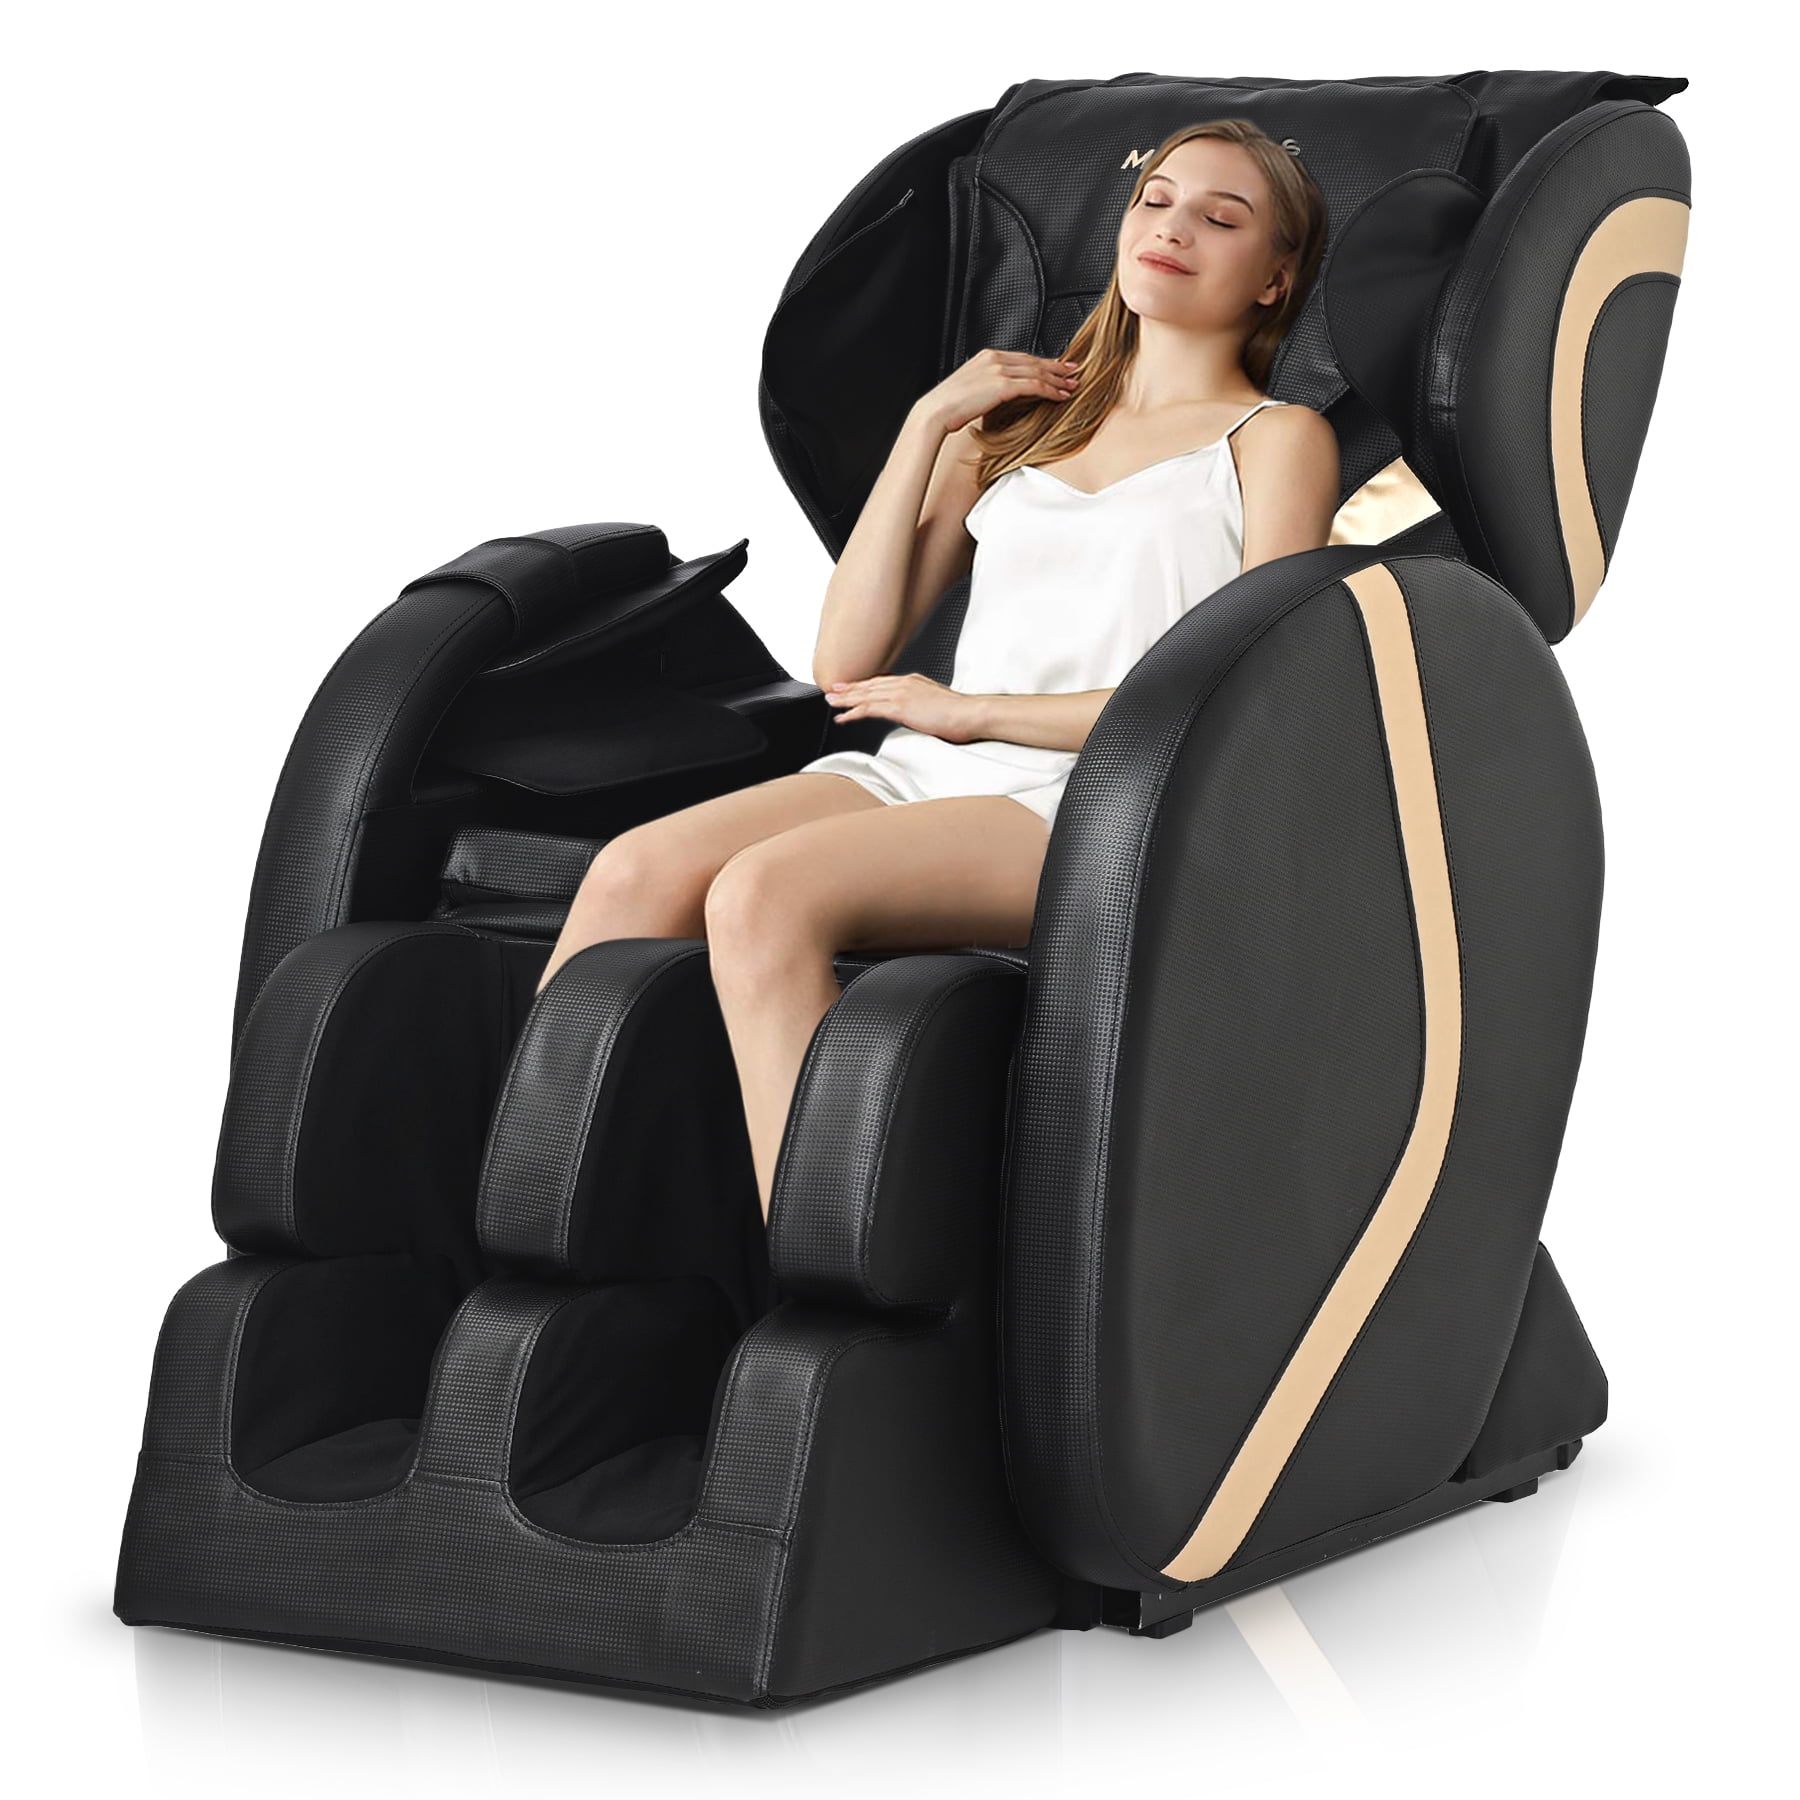 Bilitok Track Massage Chair Full Body Massage Chair With Manipulator Track Roller Bluetooth